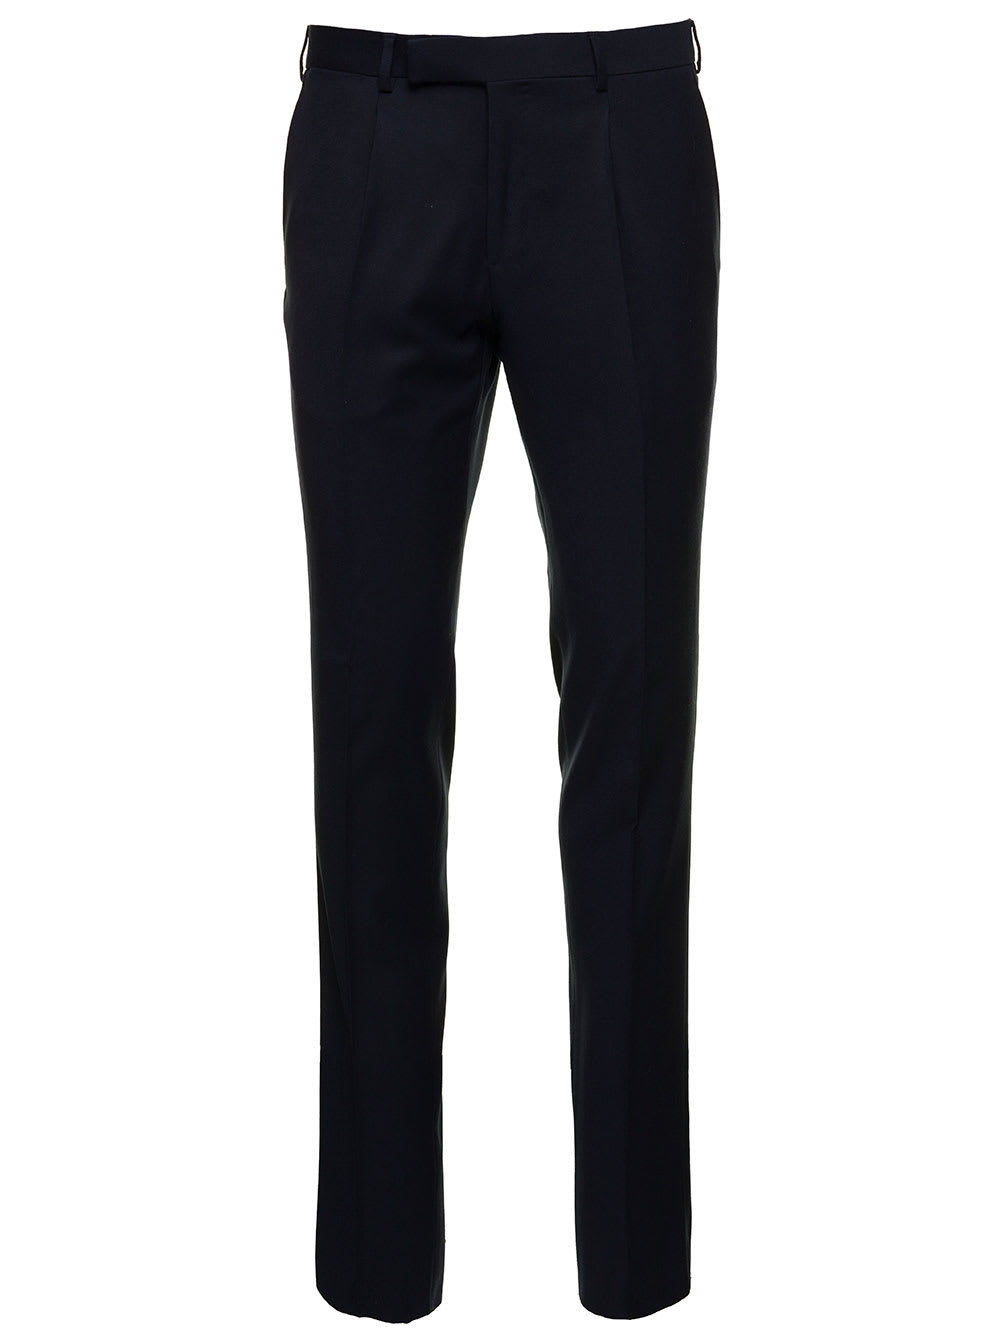 Black Slim Trousers With Pince Ib Wool Blend Man Gabriele Pasini